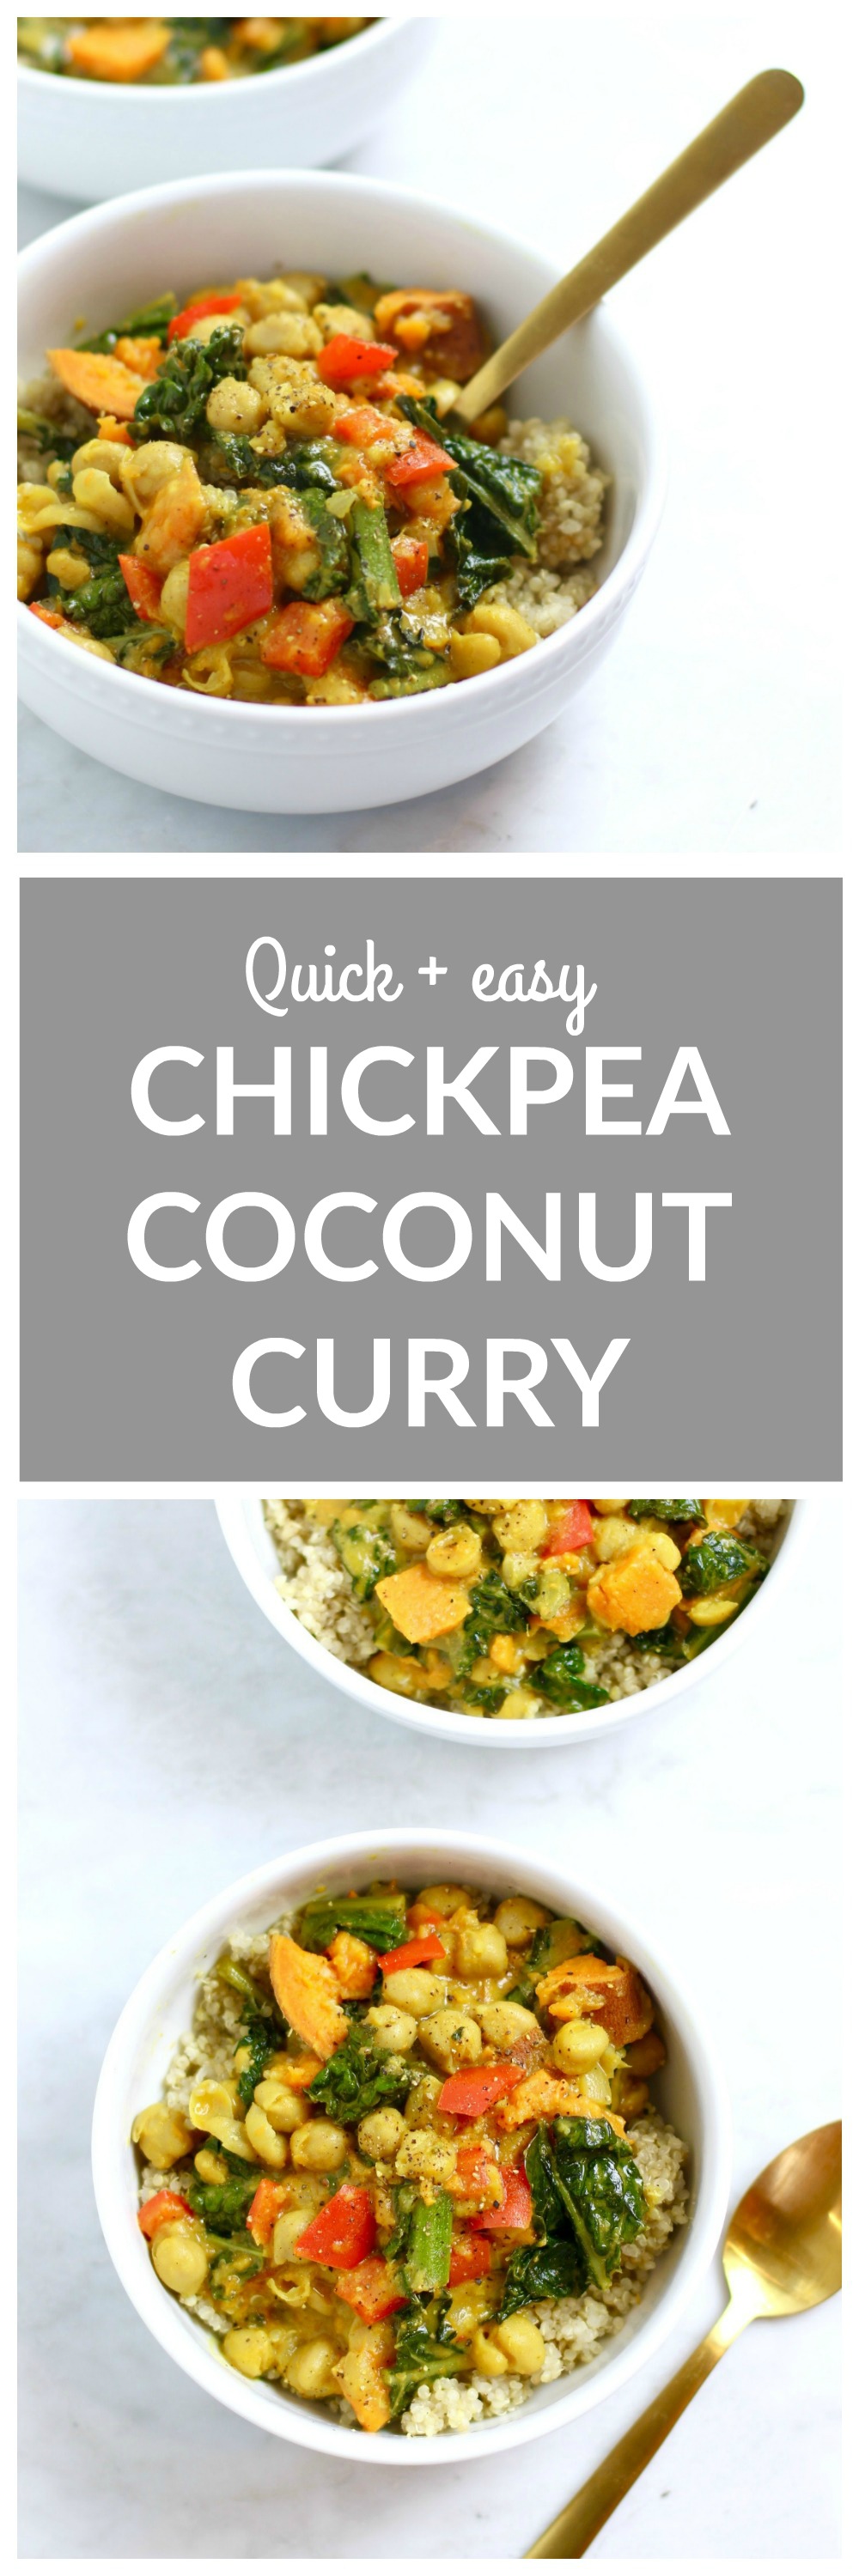 chickpea coconut curry recipe